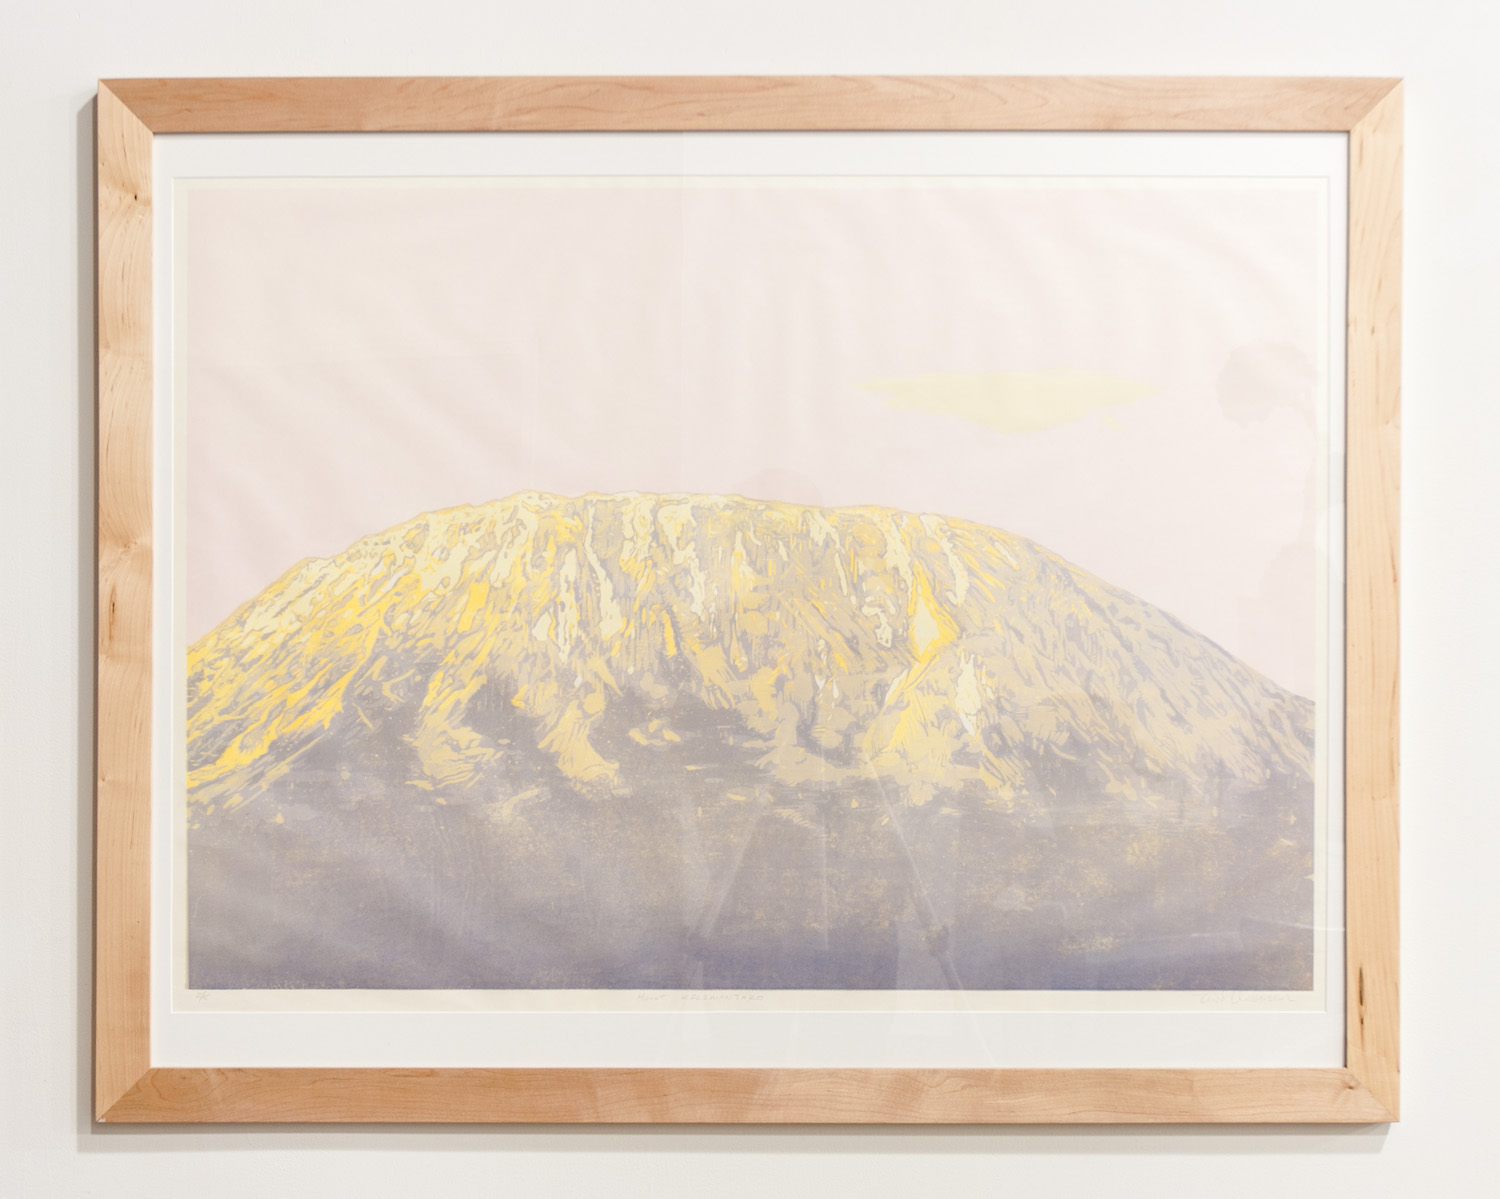  Mount Kilimanjaro reductive woodcut print on Auska Washi paper 31 x 44 inches TAN029 